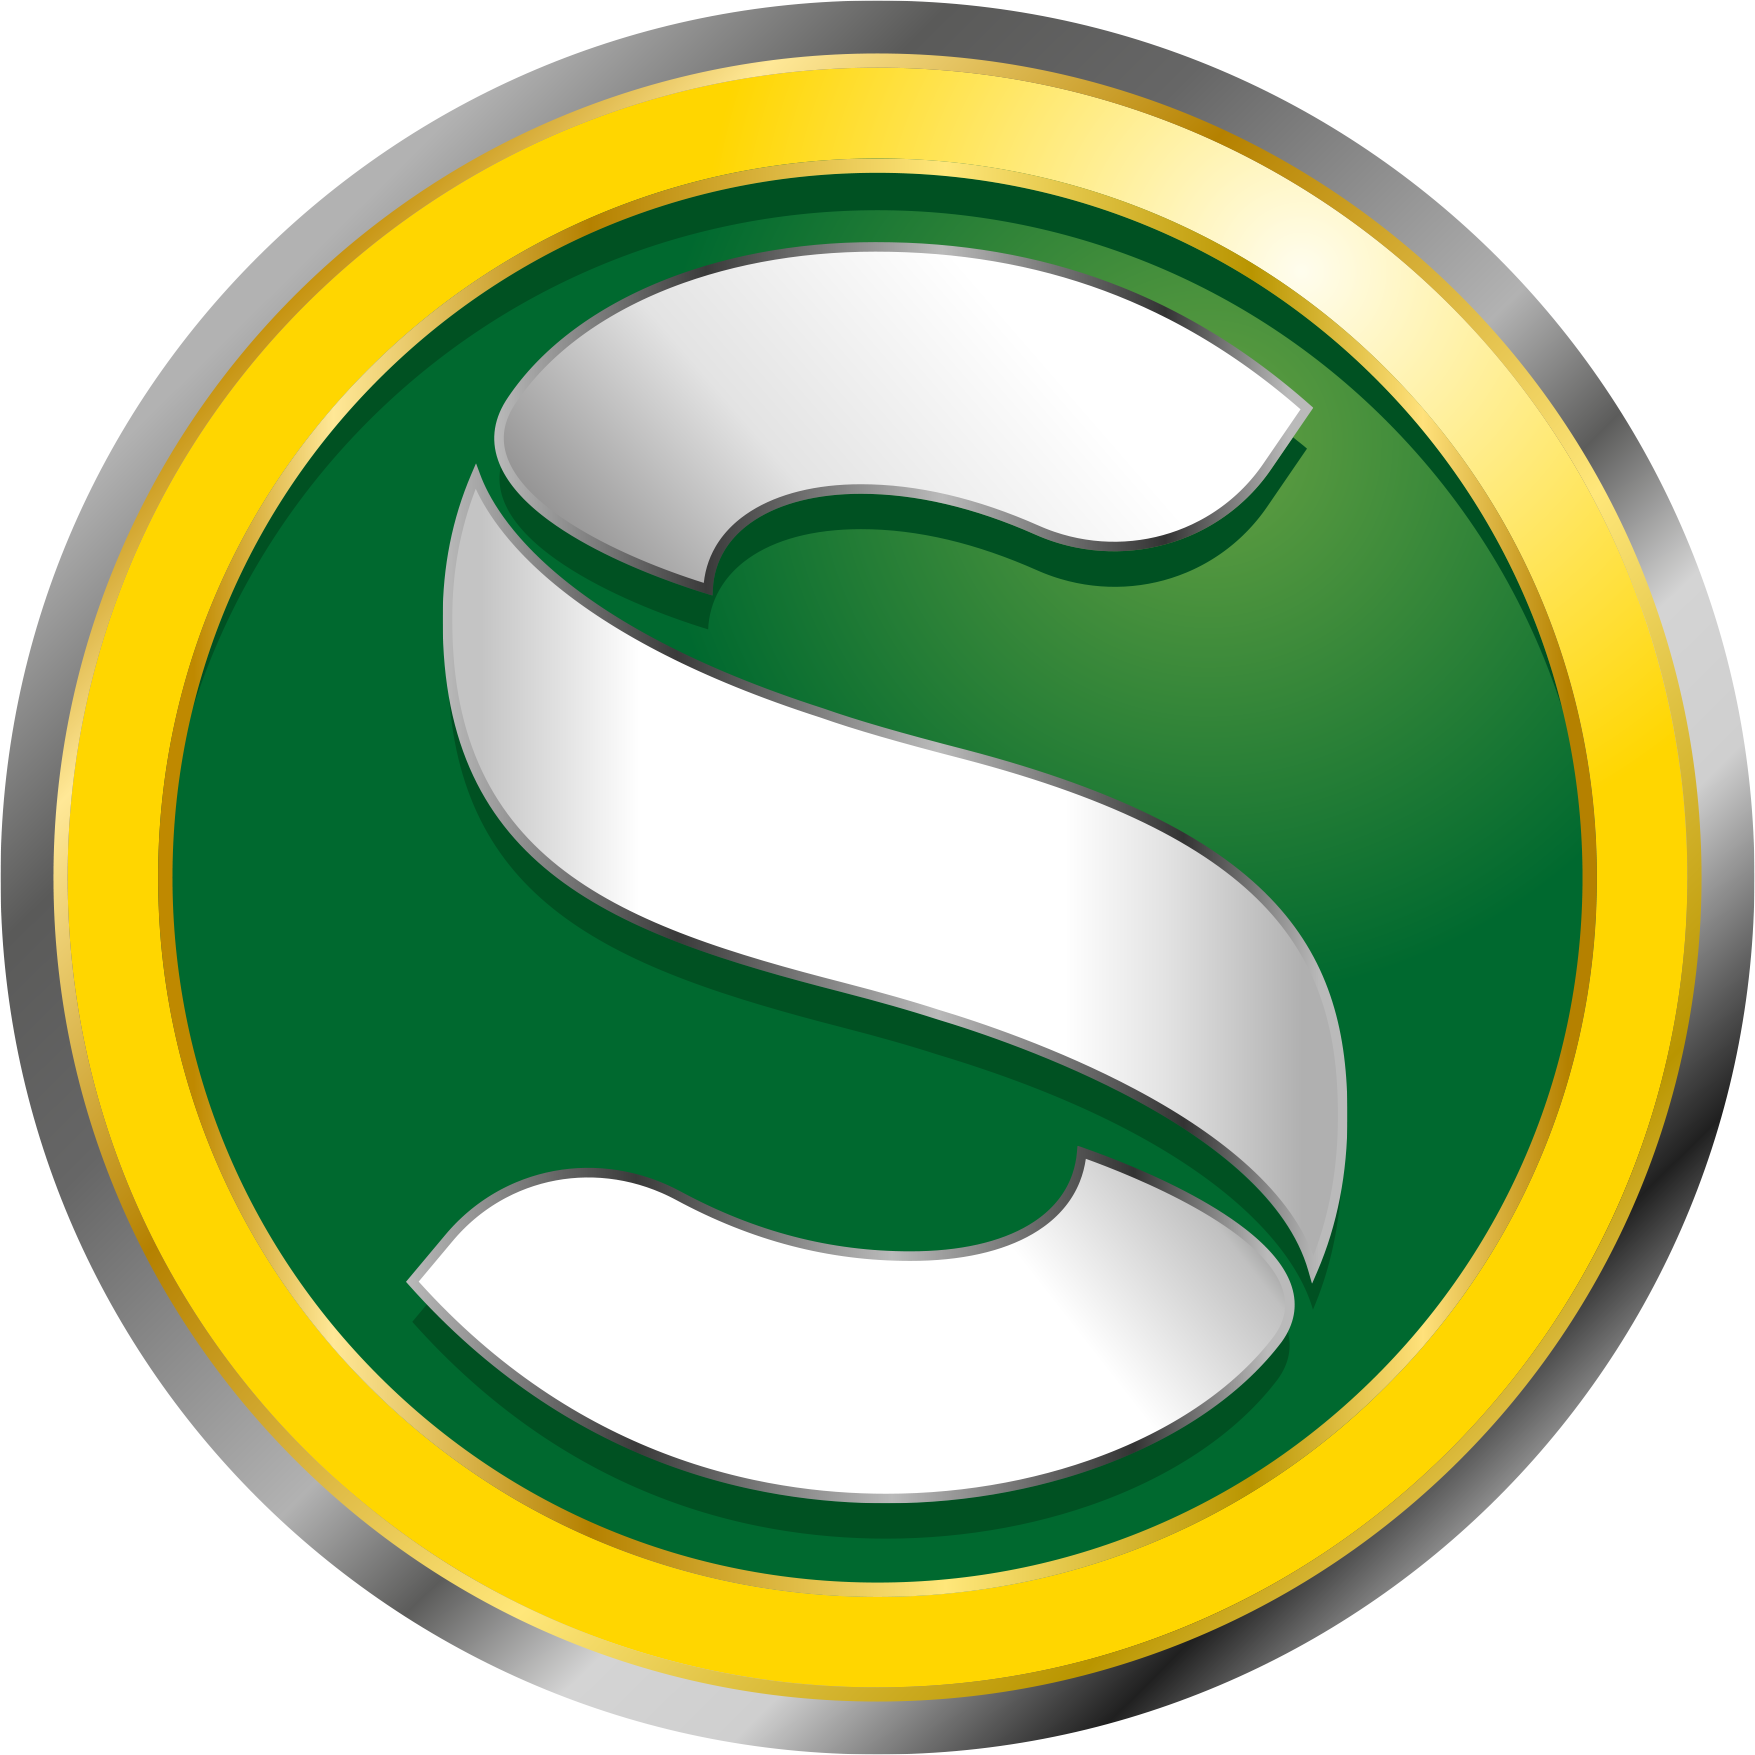 Superettan [logotyp]